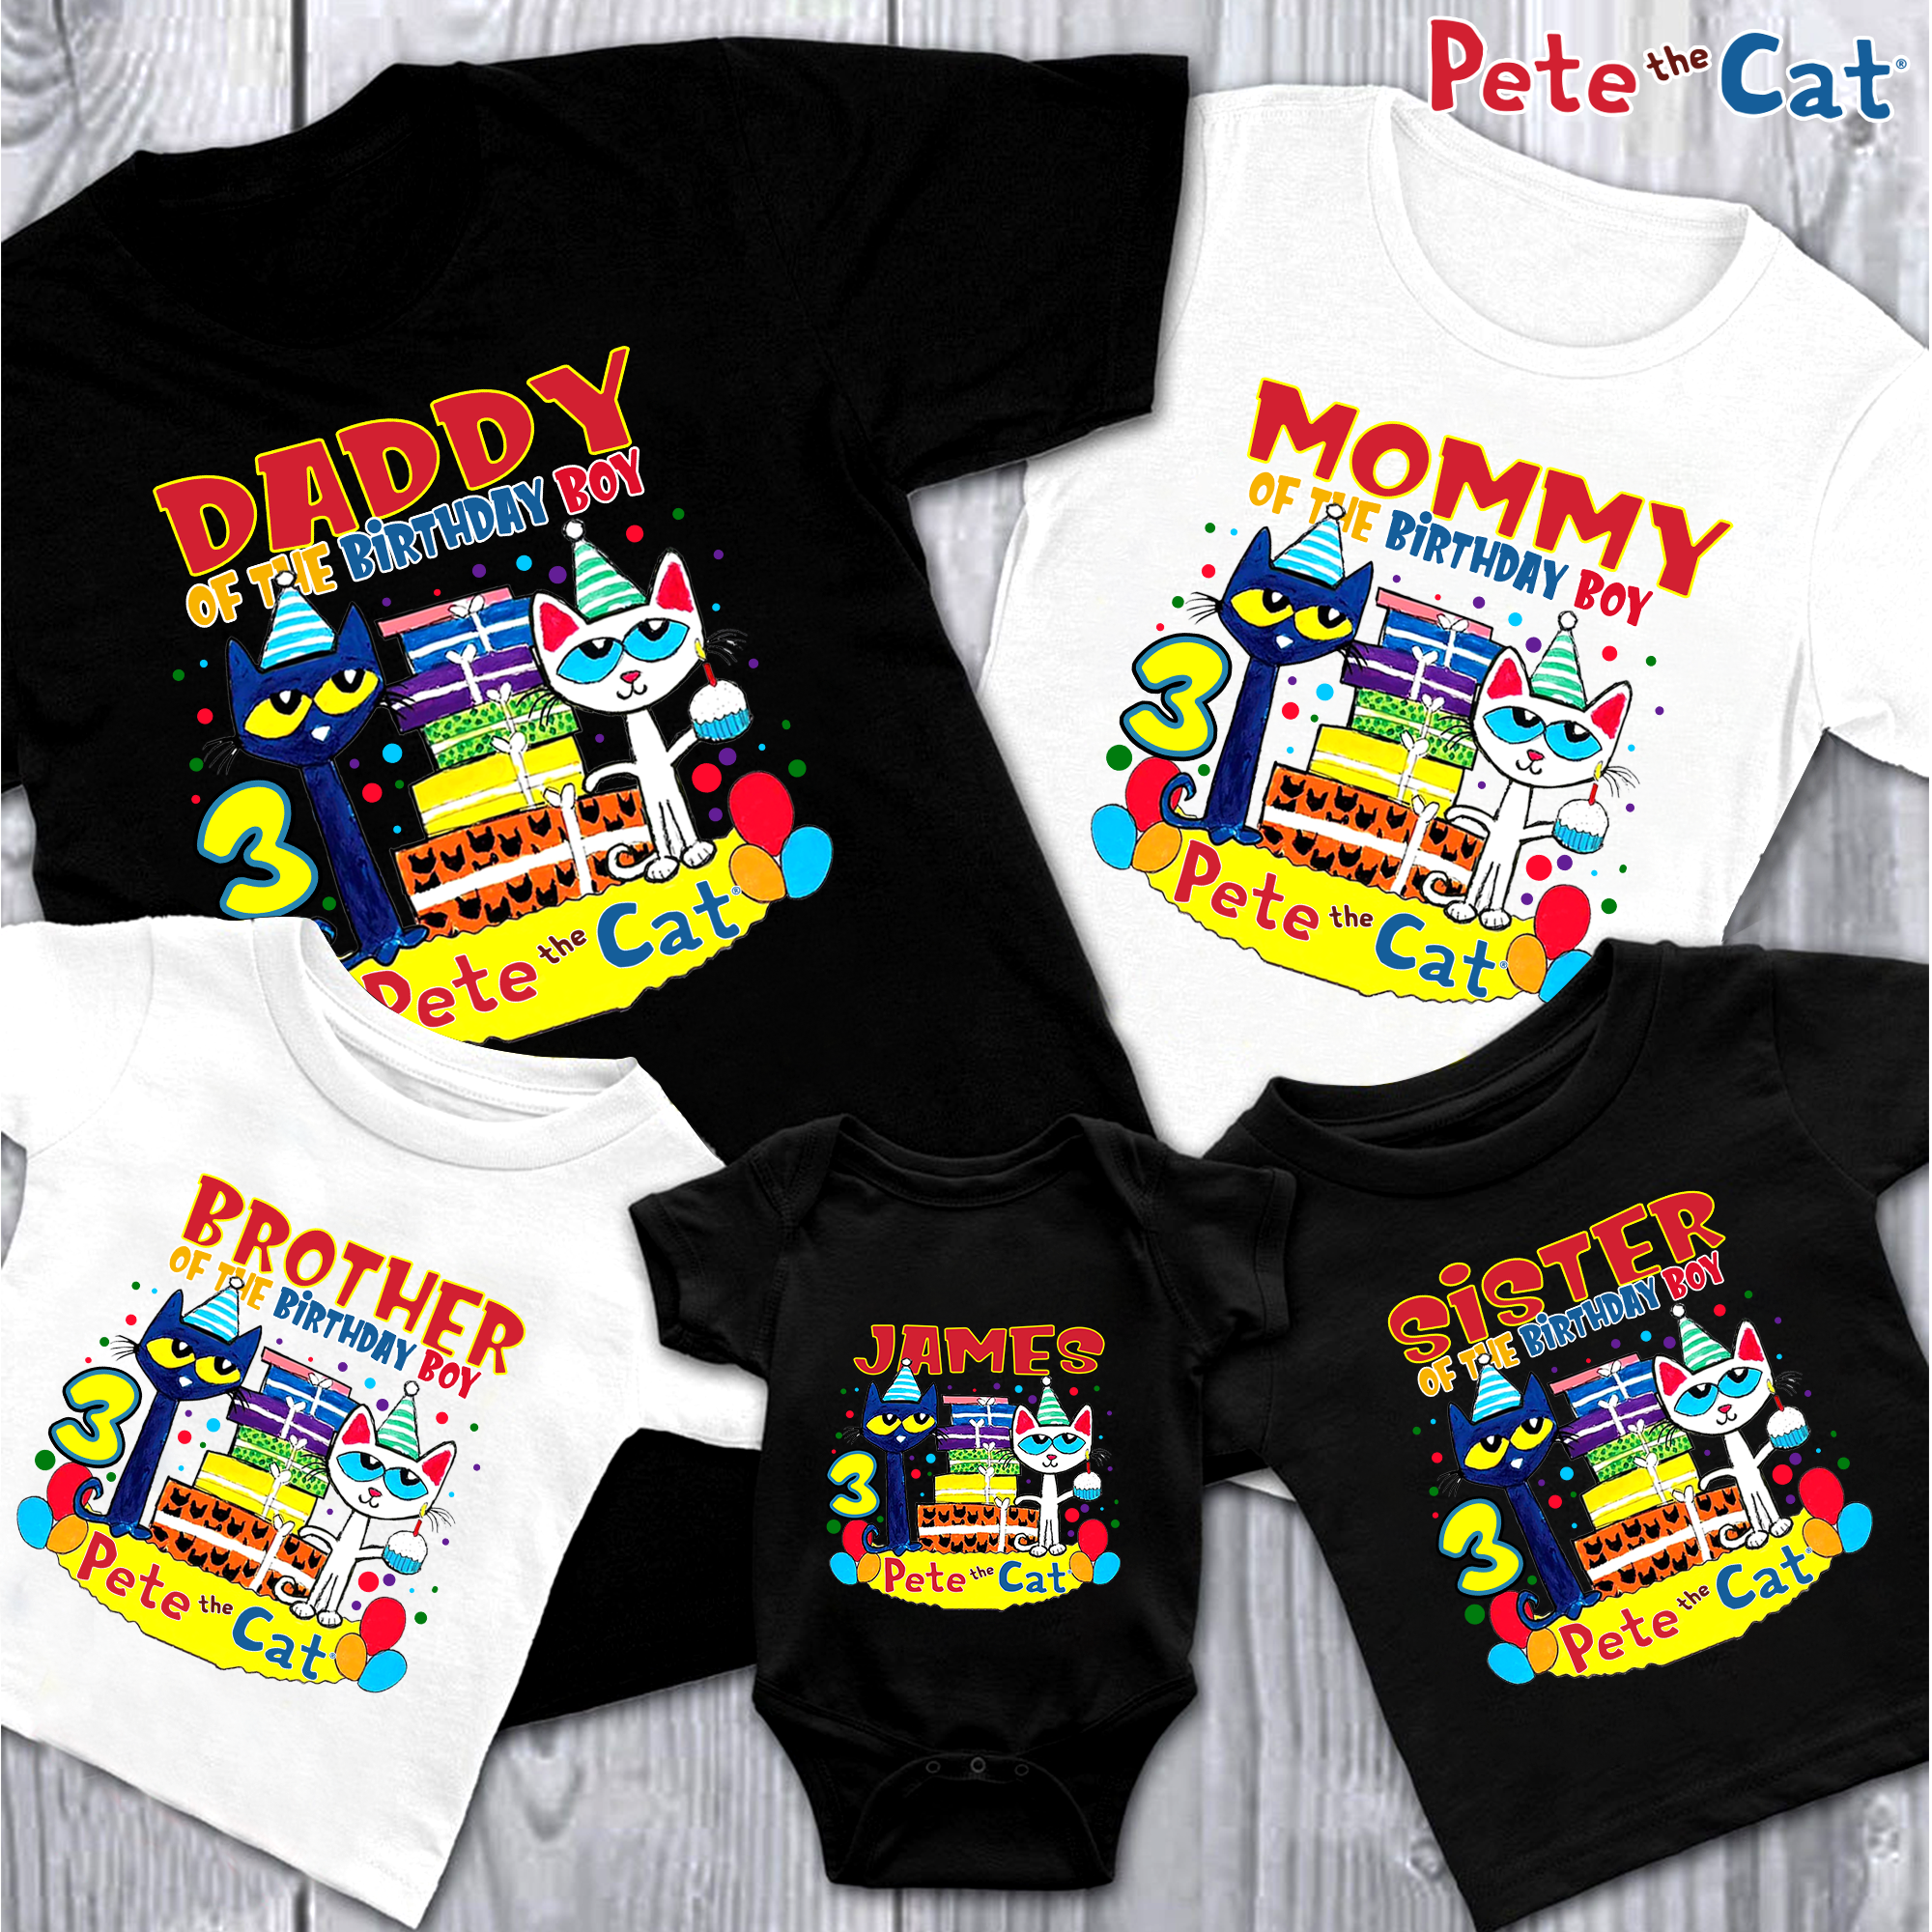 Pete The Cat Birthday Shirt, Pete The Blue Cat Inspired Shirt Groovy Birthday Shirt, Pete The Cat Matching Family Shirt